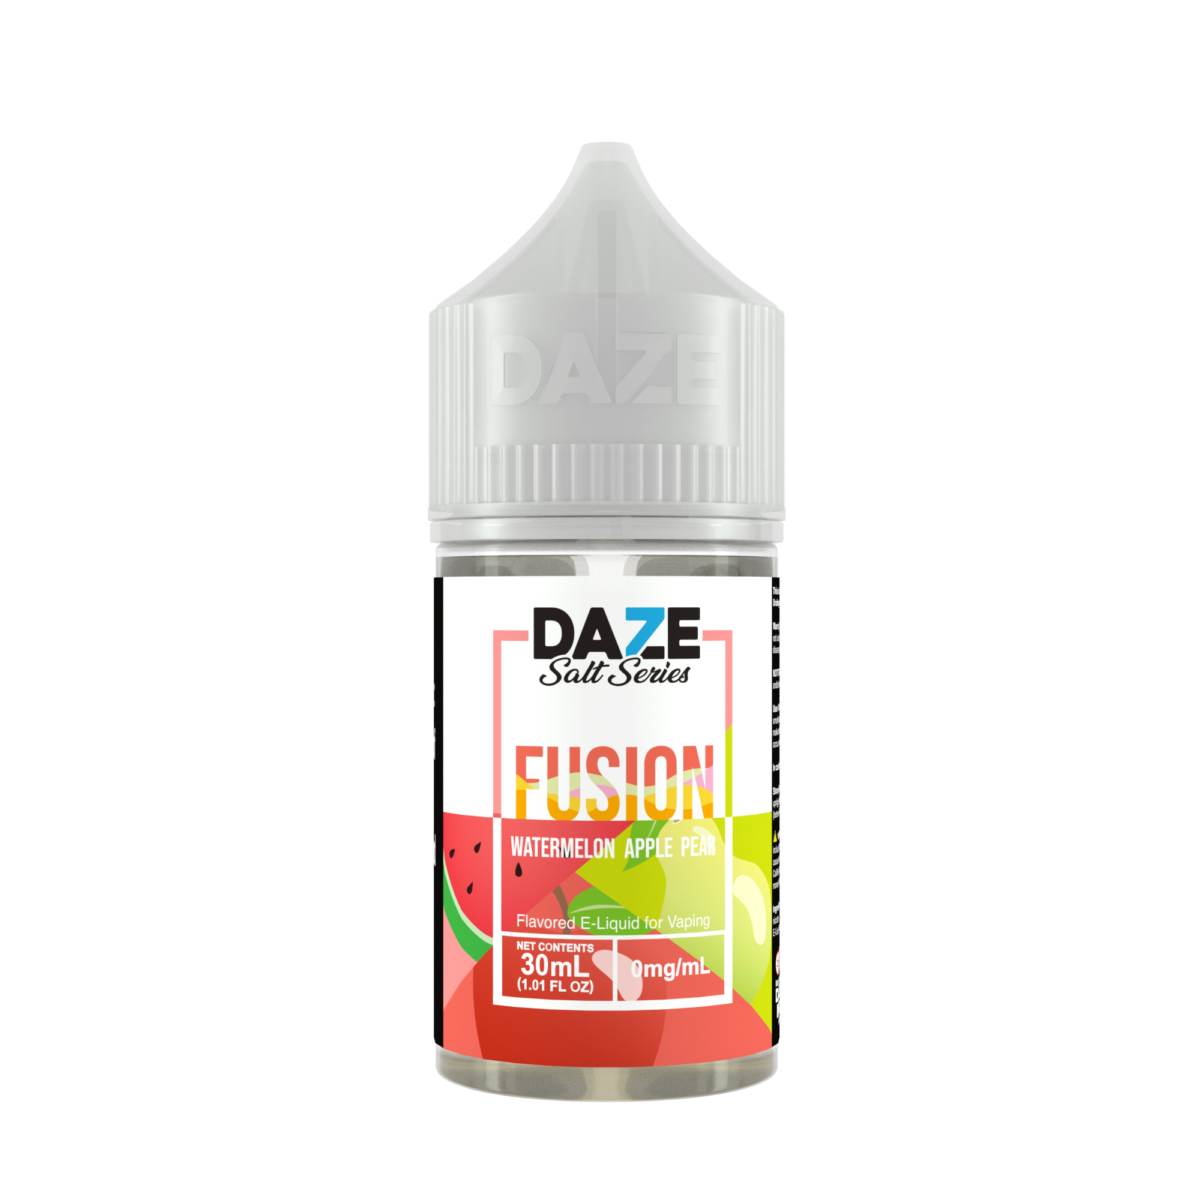 7Daze Fusion Salt Series E-Liquid 30mL (Salt Nic) | Watermelon Apple Pear